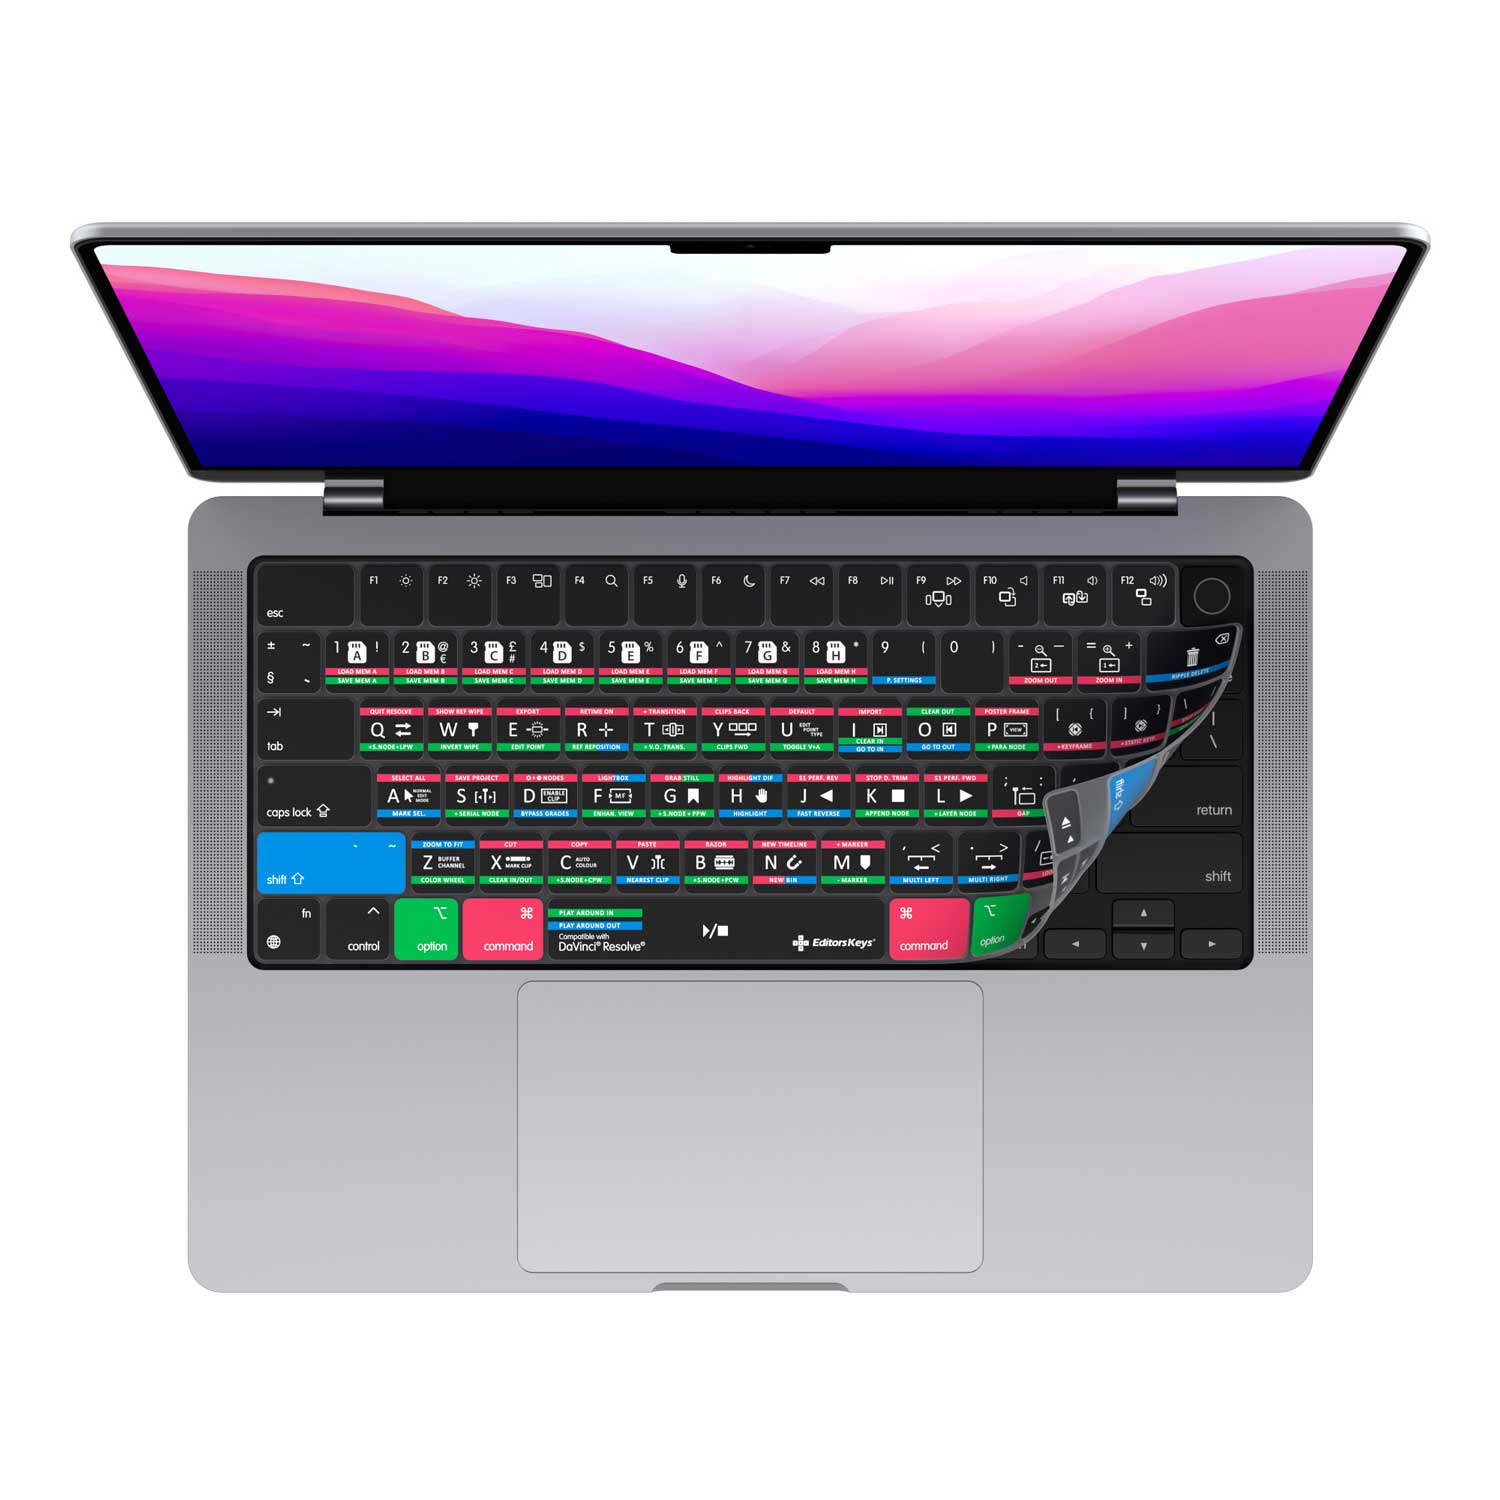 DaVinci Resolve Keyboard Covers for MacBook and iMac - Editors Keys